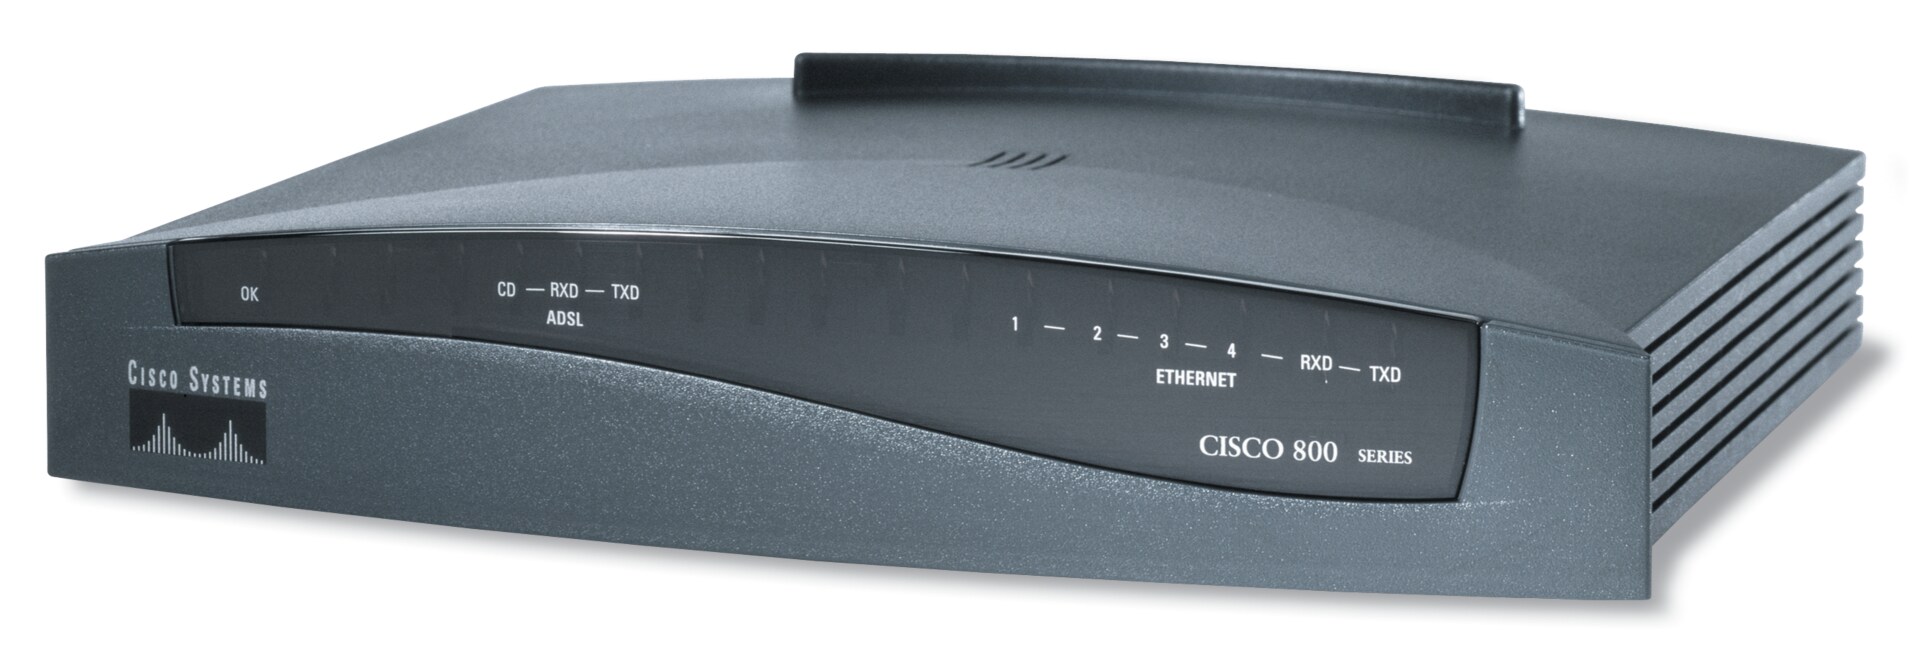 Cisco 837 Broadband Router